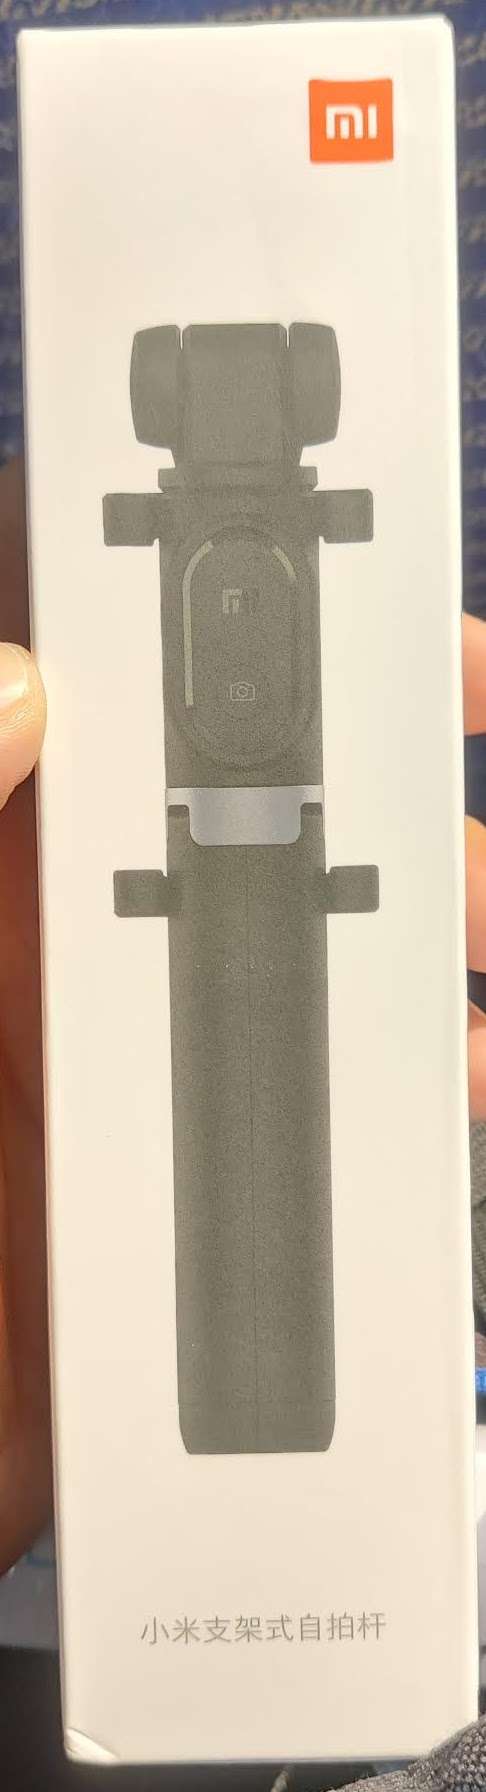 Original Mi Selfie Stick Tripod (with Bluetooth remote)